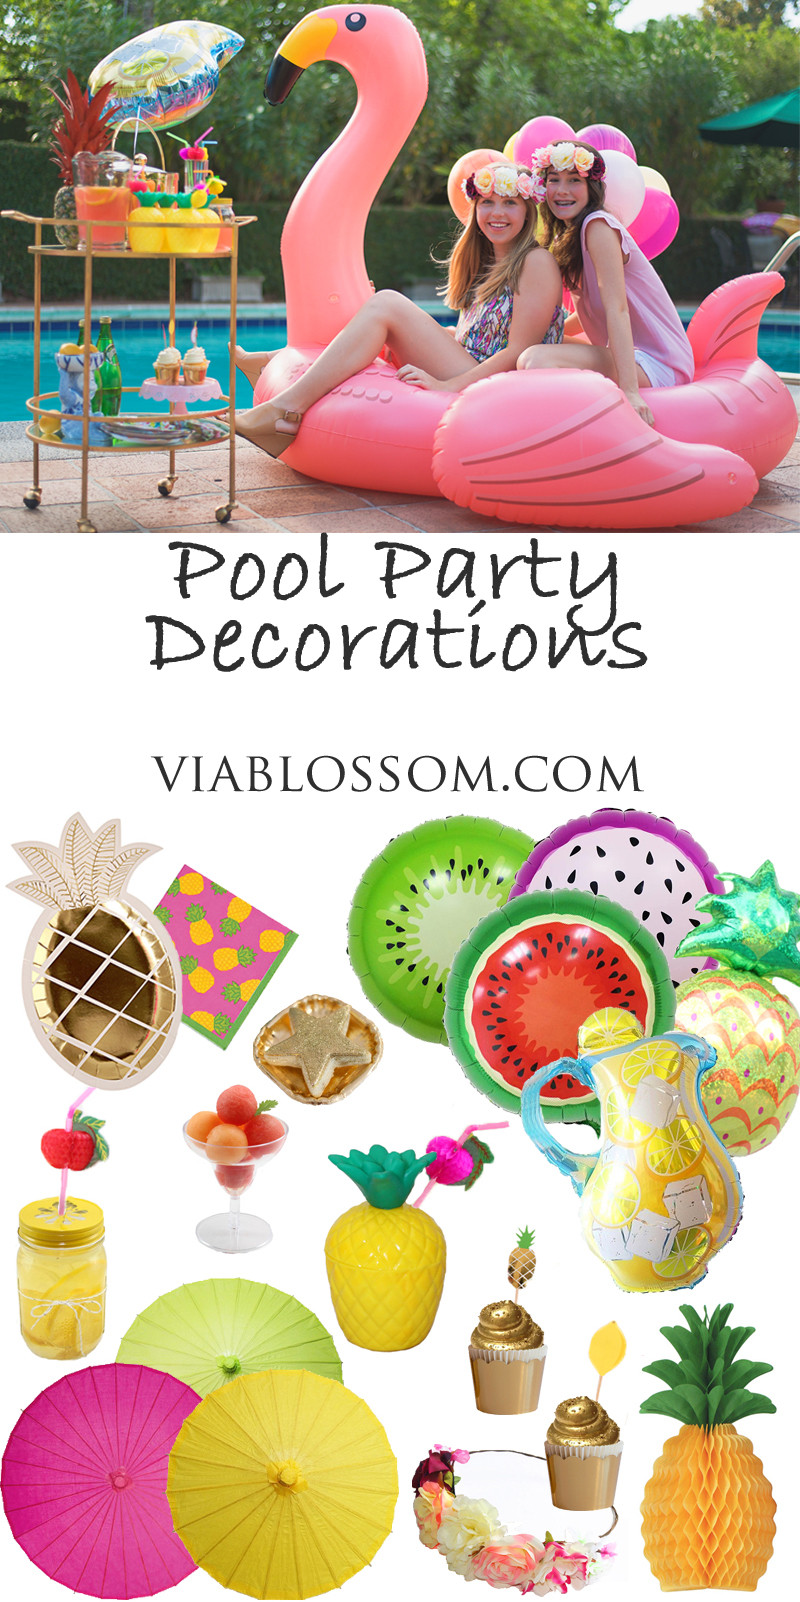 Pool Party Ideas For Birthdays
 Pool Party Ideas Via Blossom